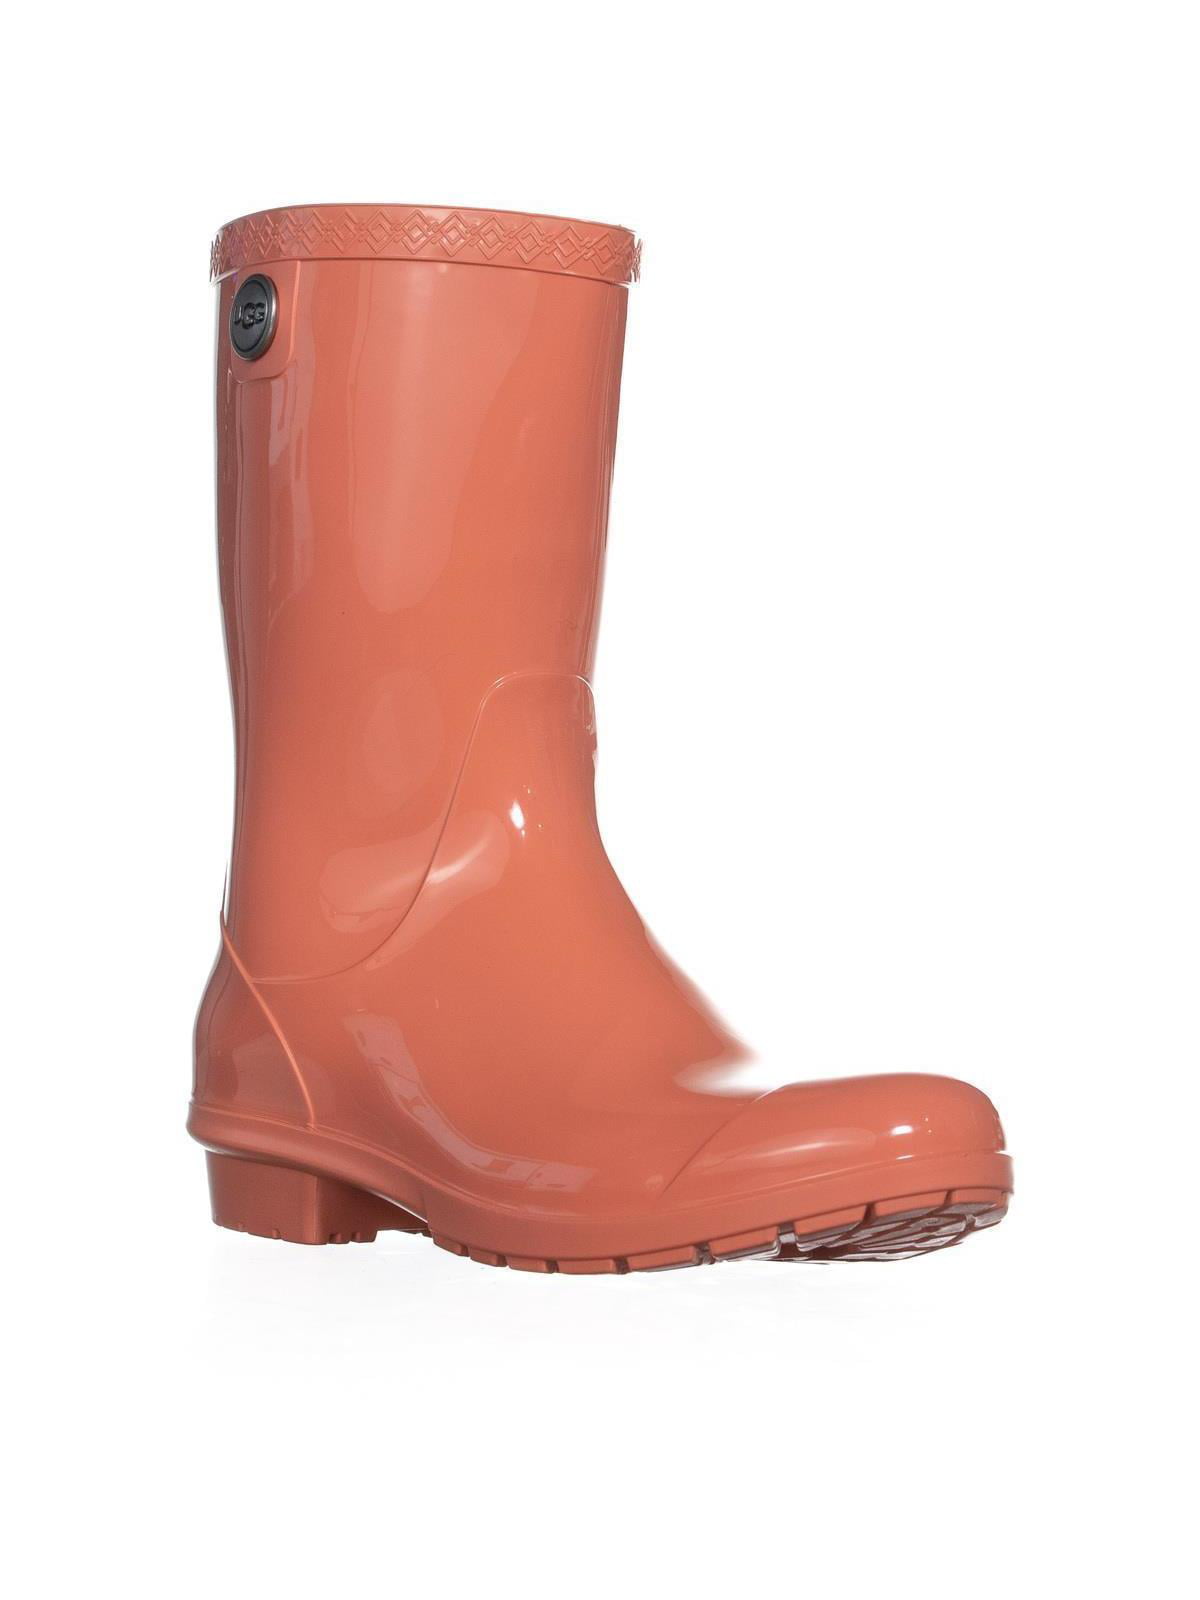 UGG - Womens UGG Australia Sienna Mid-Calf Rain Boots, Vibrant Coral, 8 US - Walmart.com 